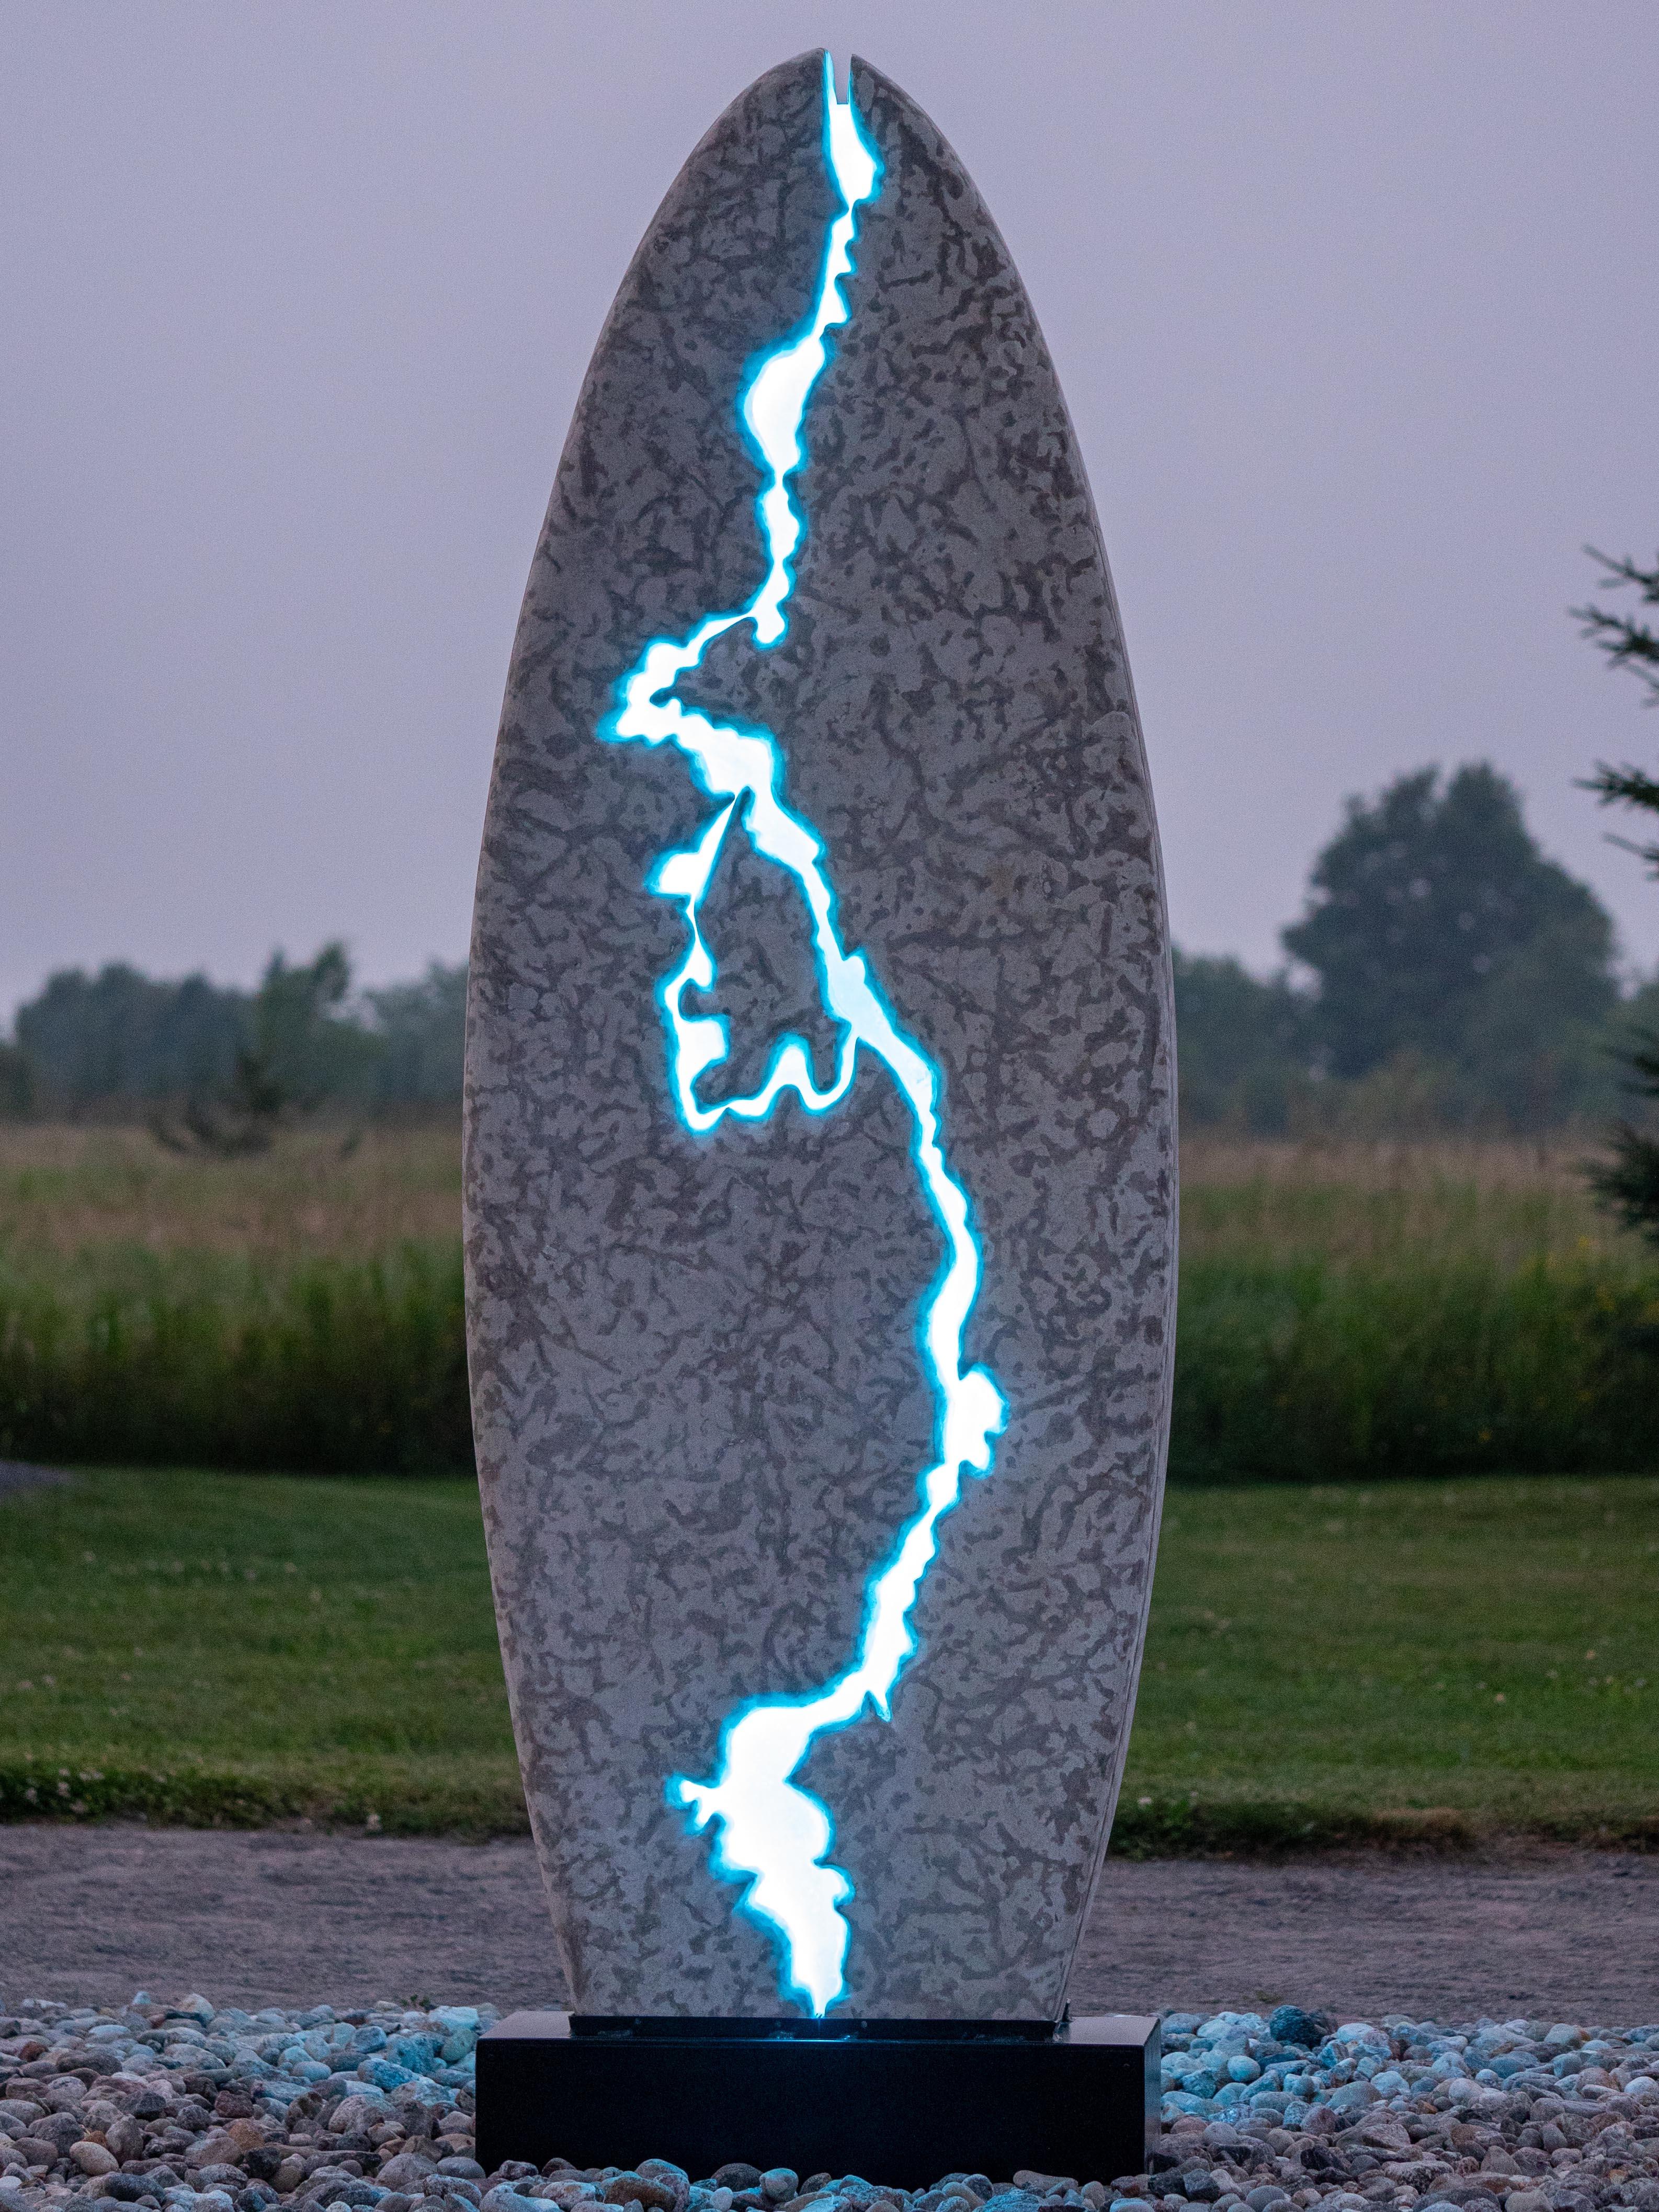 Bloodvein Monolith - large, illuminated, limestone and glass outdoor sculpture